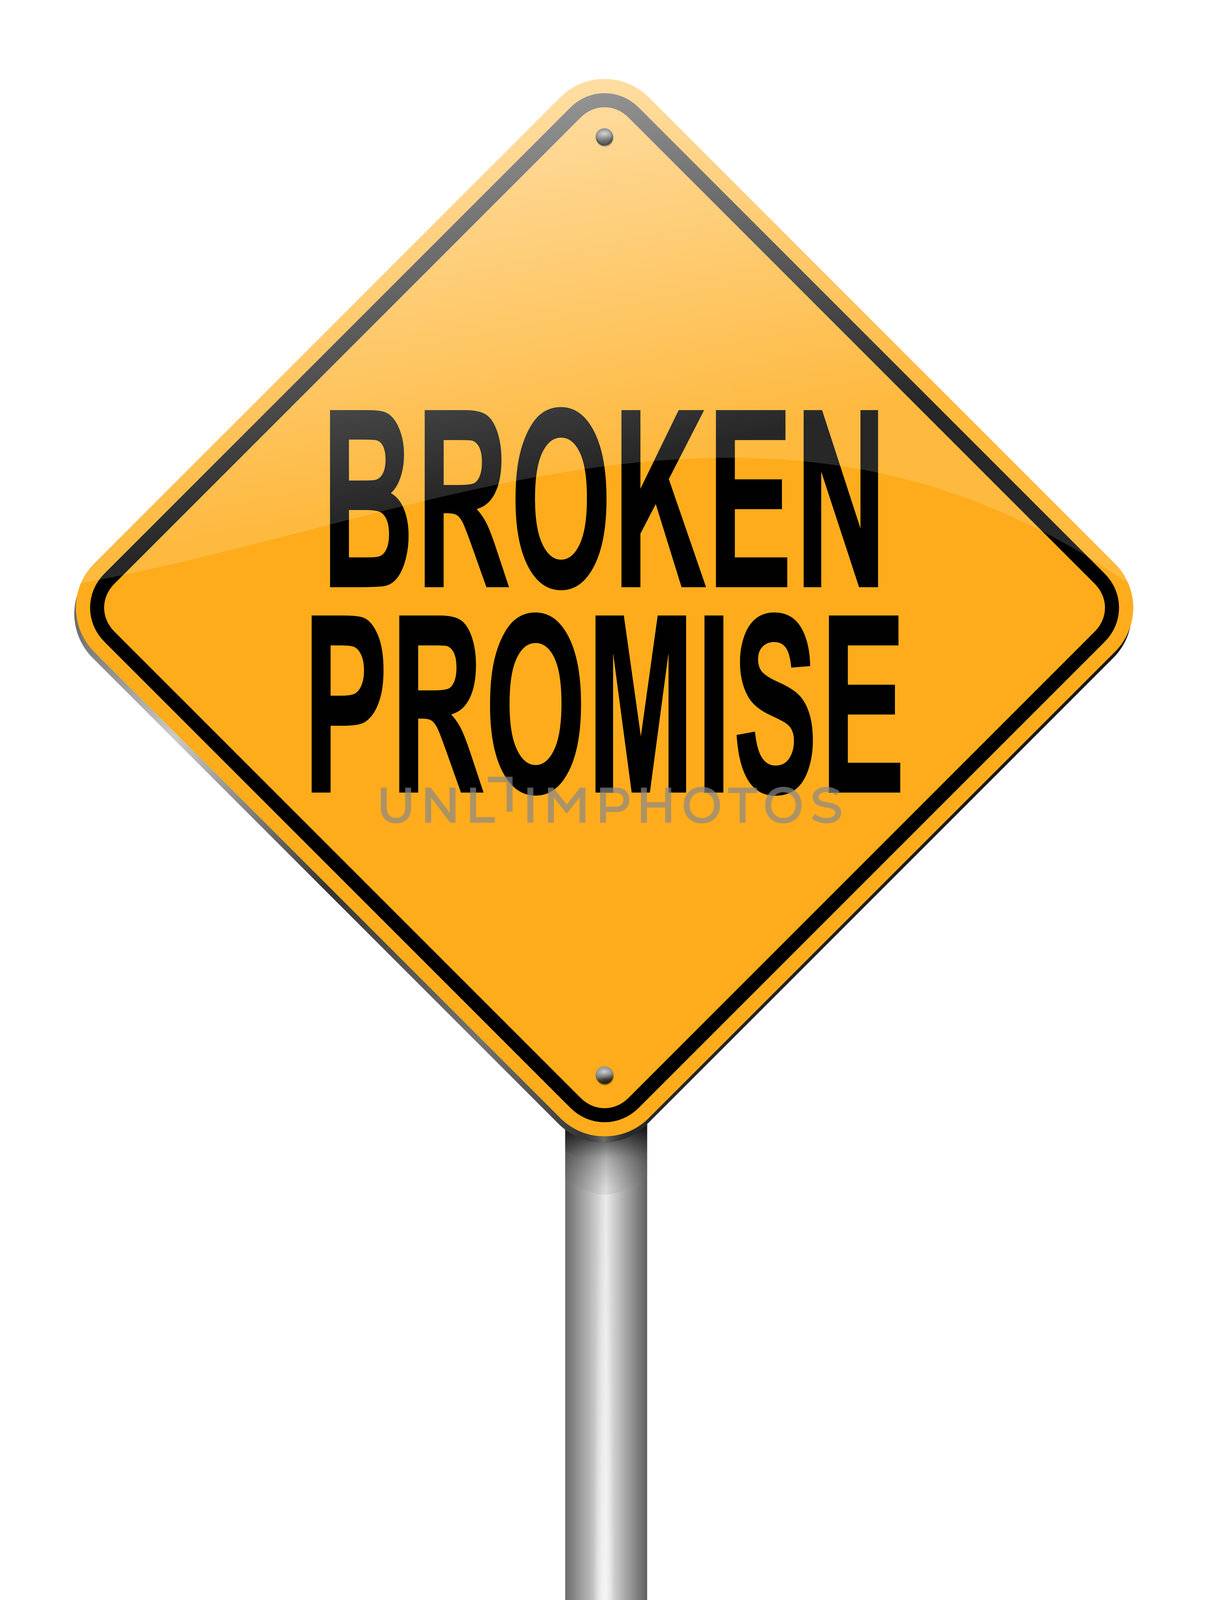 Broken promise concept. by 72soul